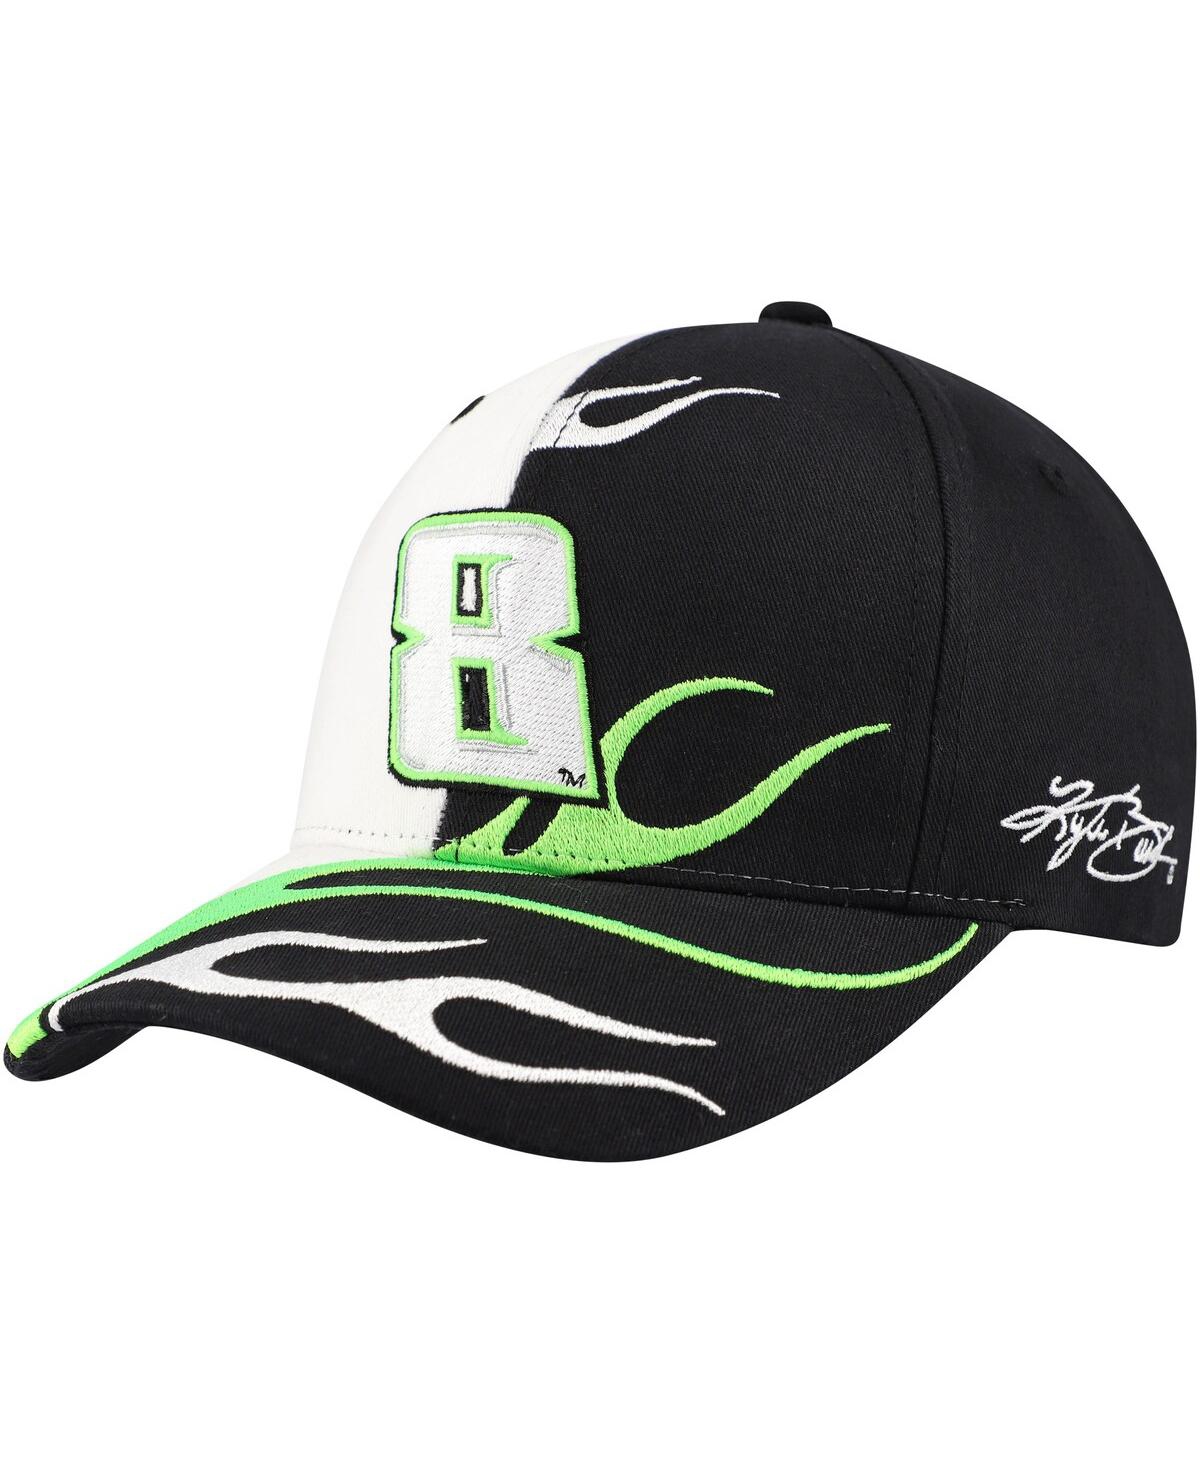 Richard Childress Racing Team Collection Men's Black Kyle Busch Flame Adjustable Hat